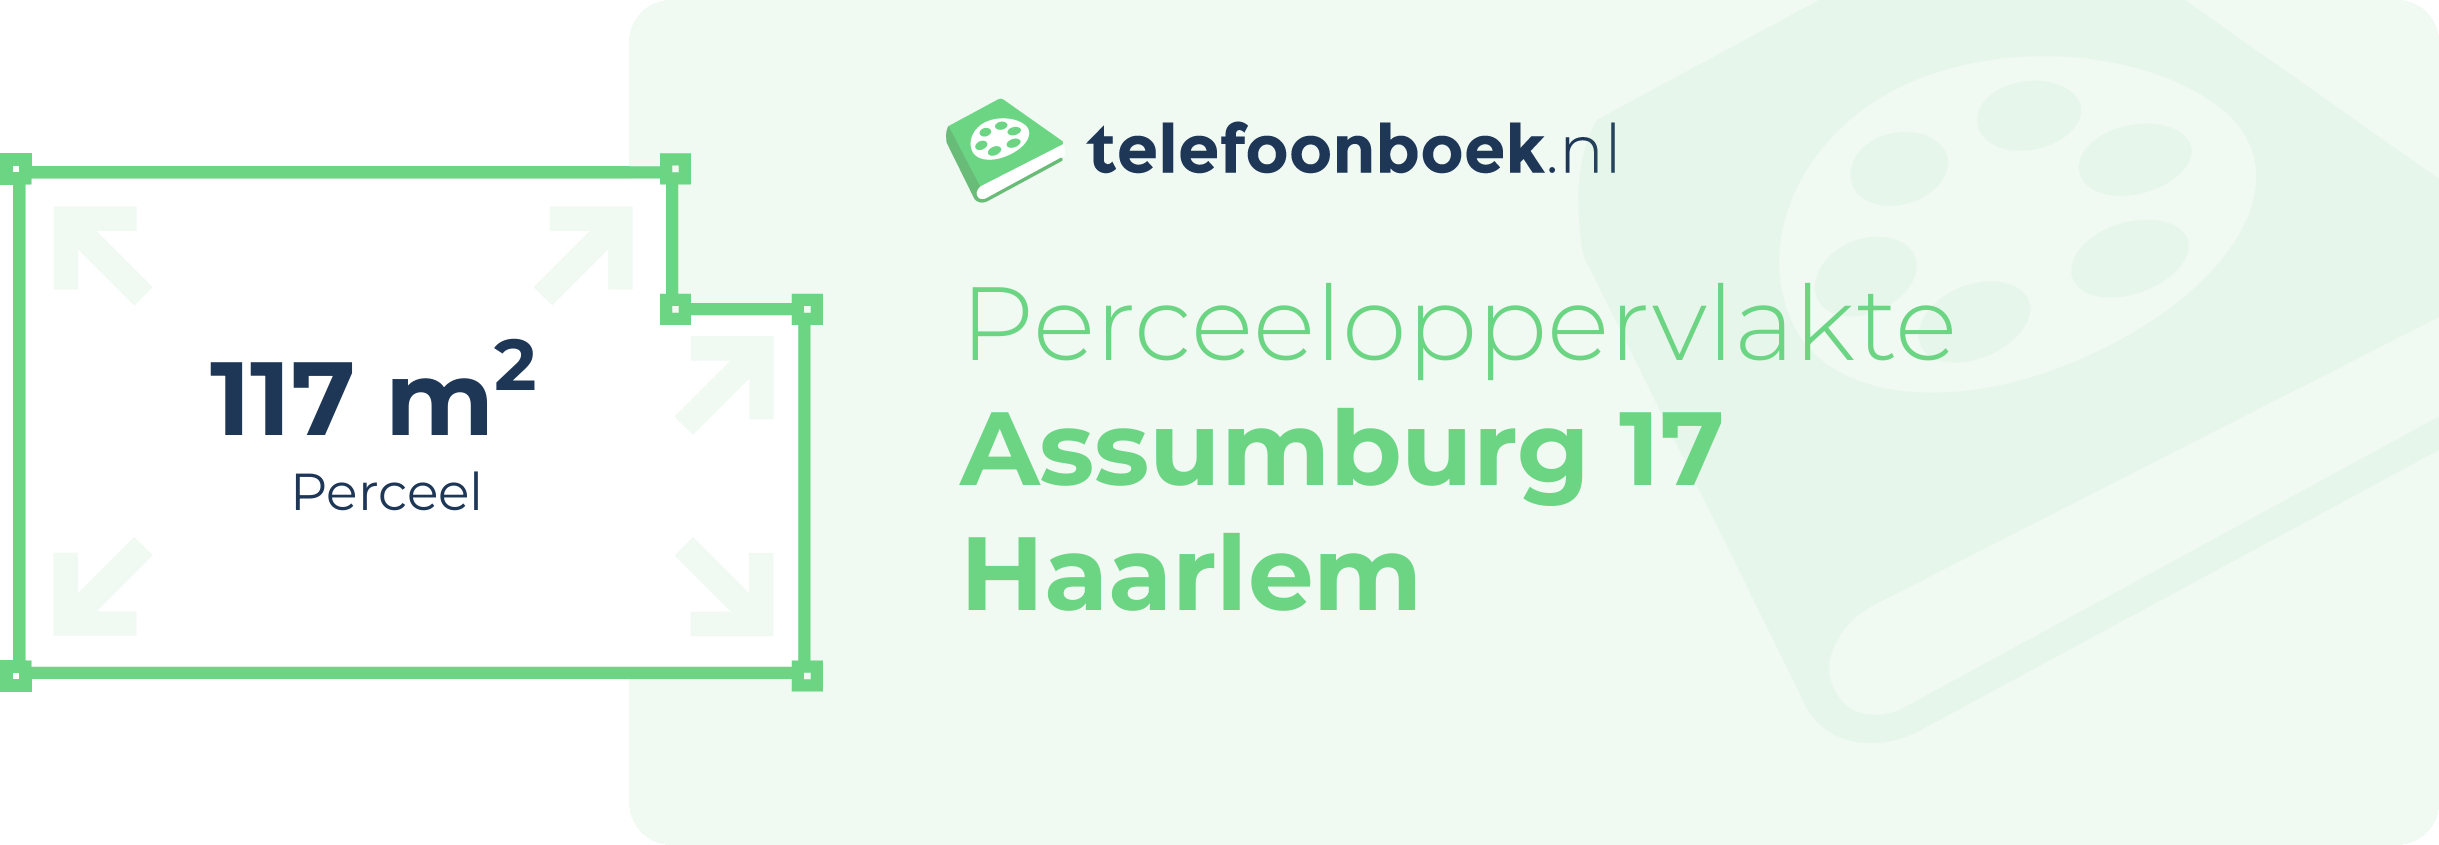 Perceeloppervlakte Assumburg 17 Haarlem